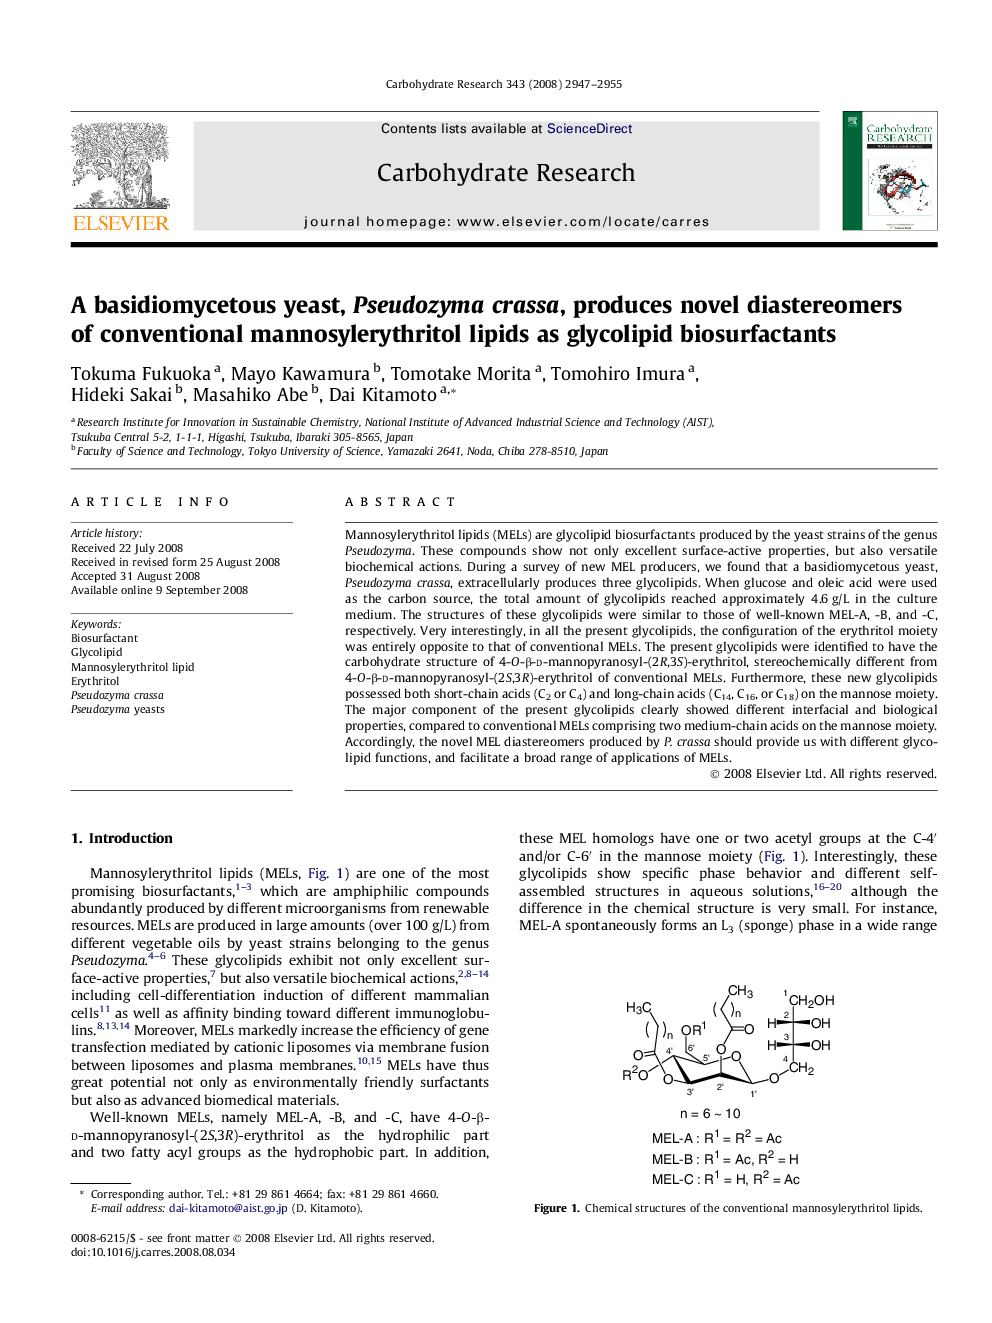 A basidiomycetous yeast, Pseudozyma crassa, produces novel diastereomers of conventional mannosylerythritol lipids as glycolipid biosurfactants